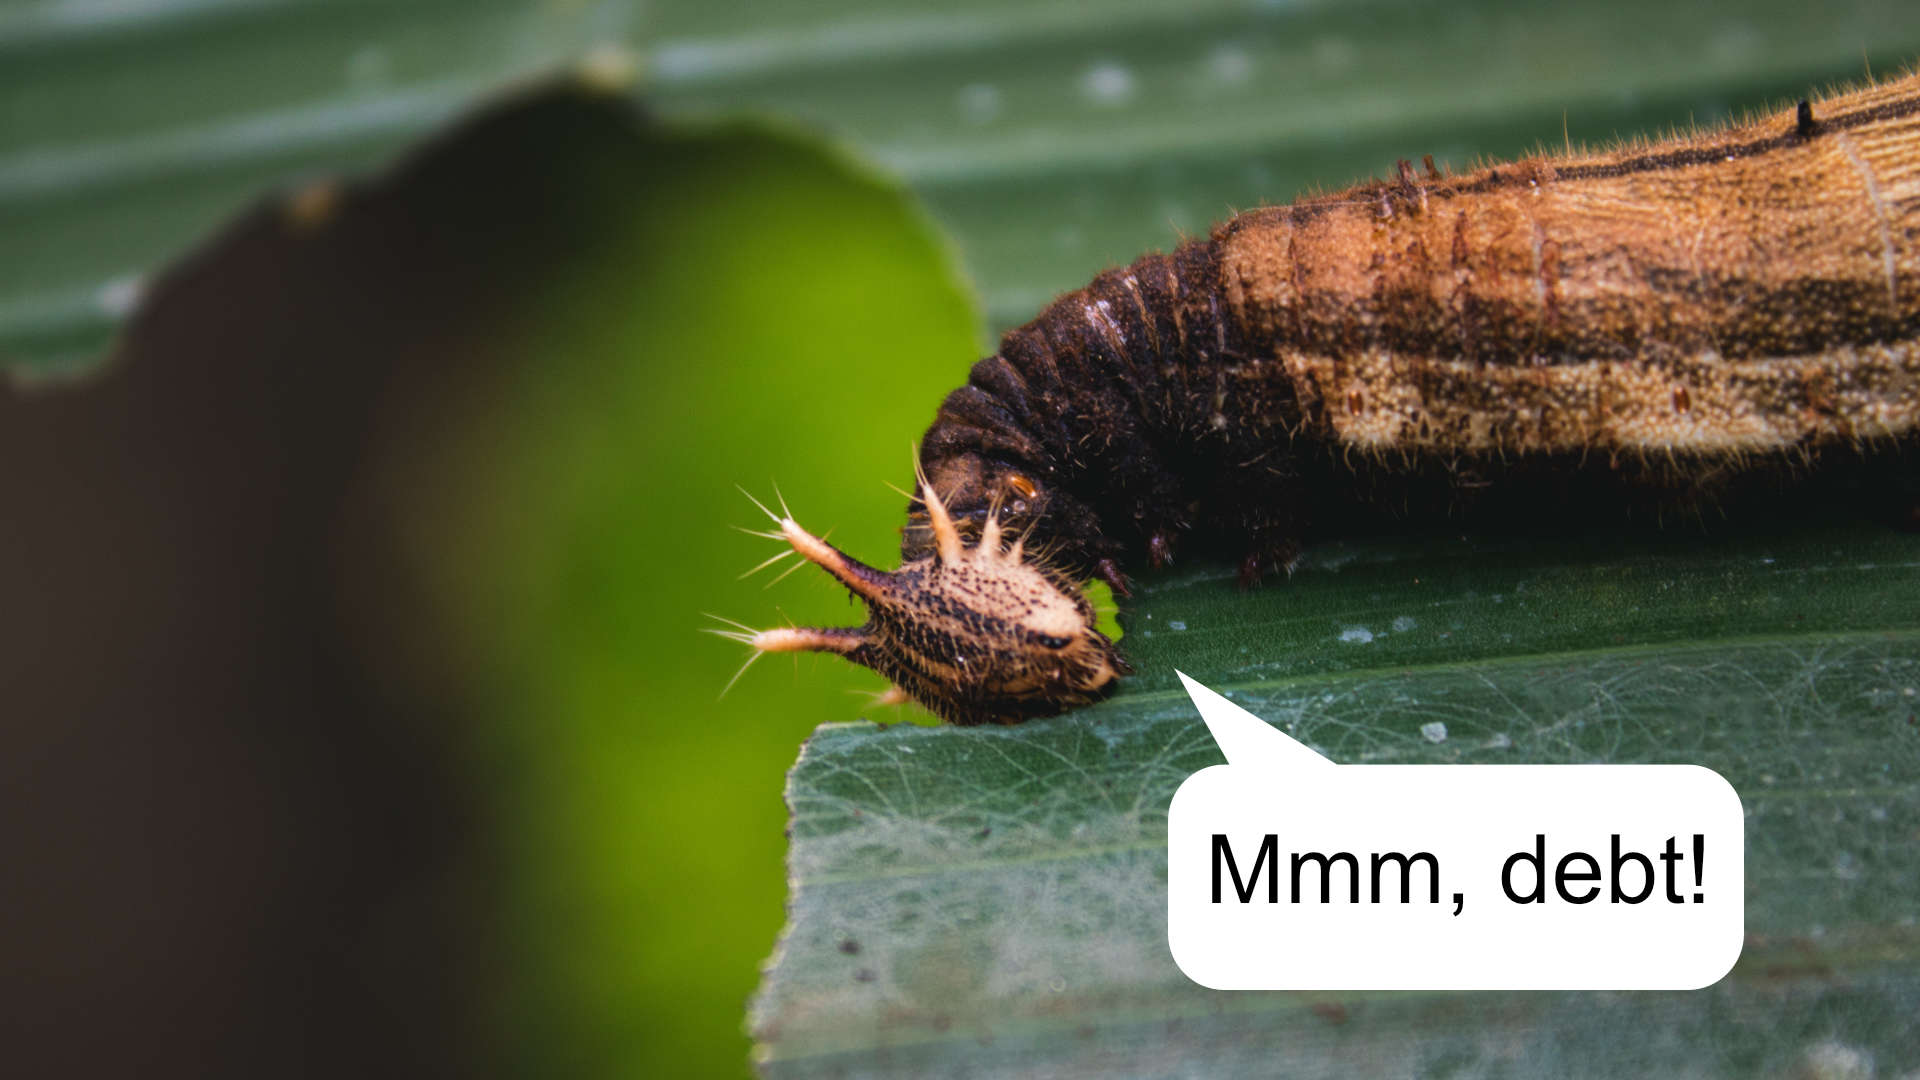 The very debt-hungry caterpillar.